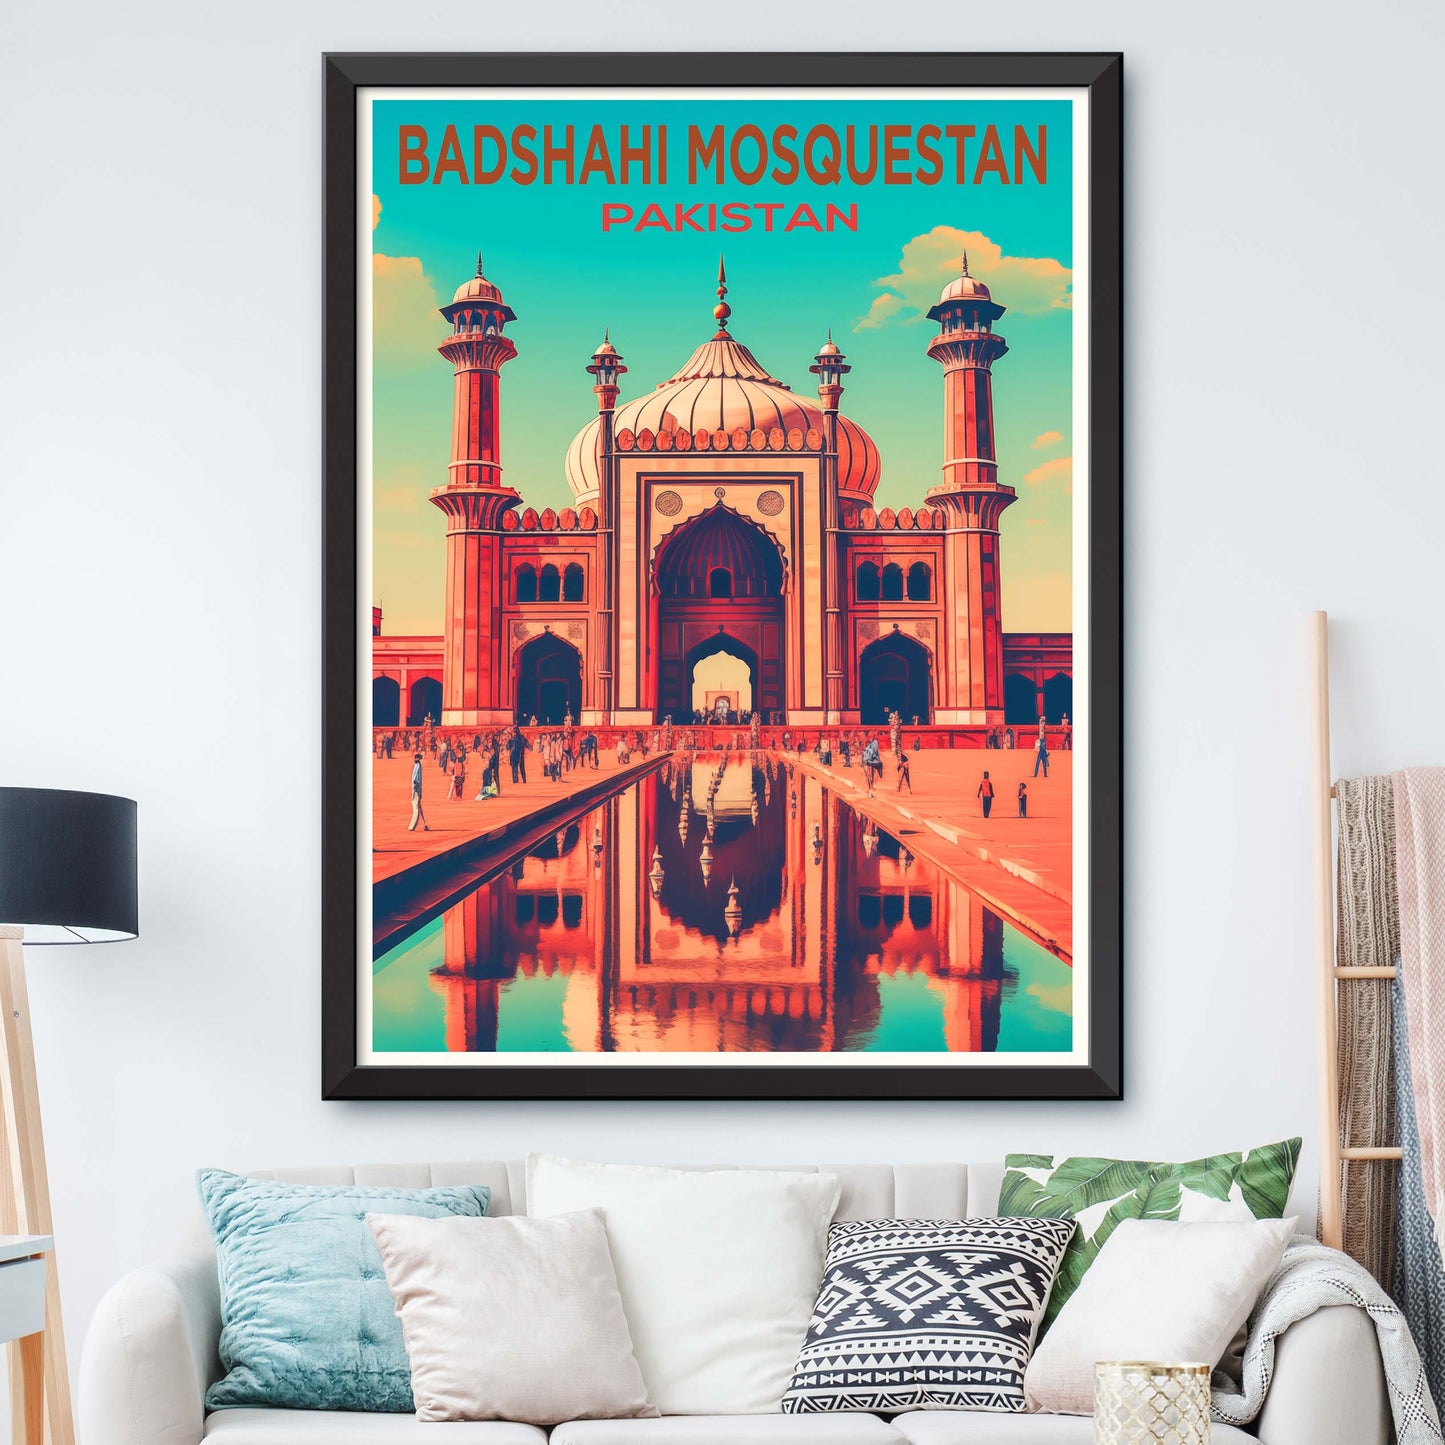 Badshahi Mosque Digital Print Colorful Islamic wall art decor Pakistan Travel poster